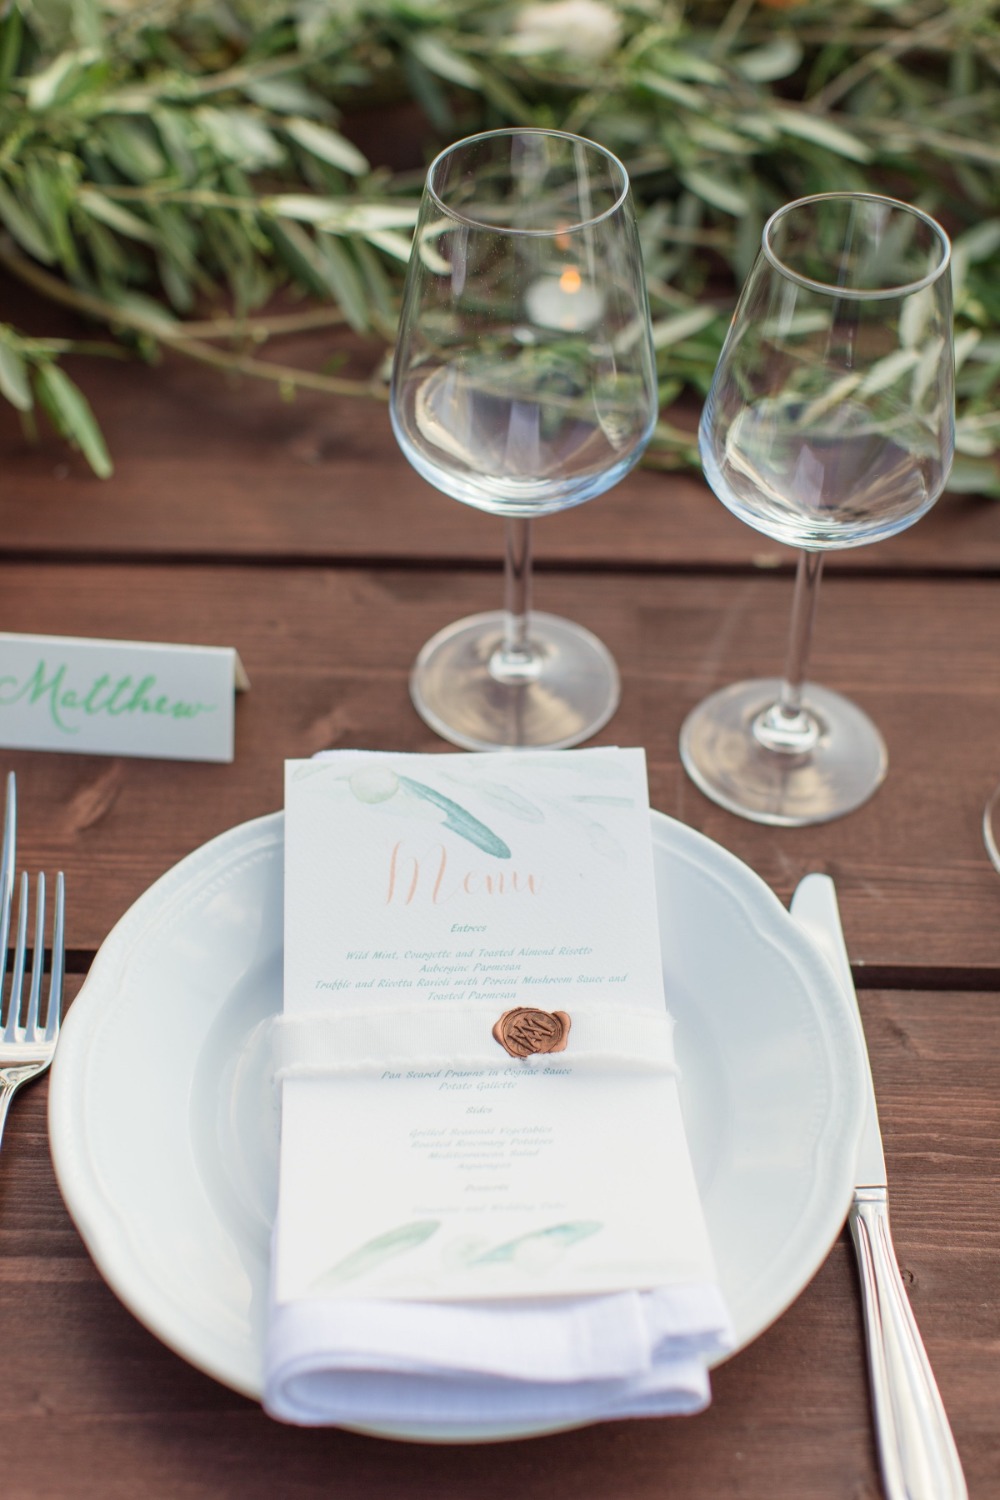 simple and sweet wedding menu idea